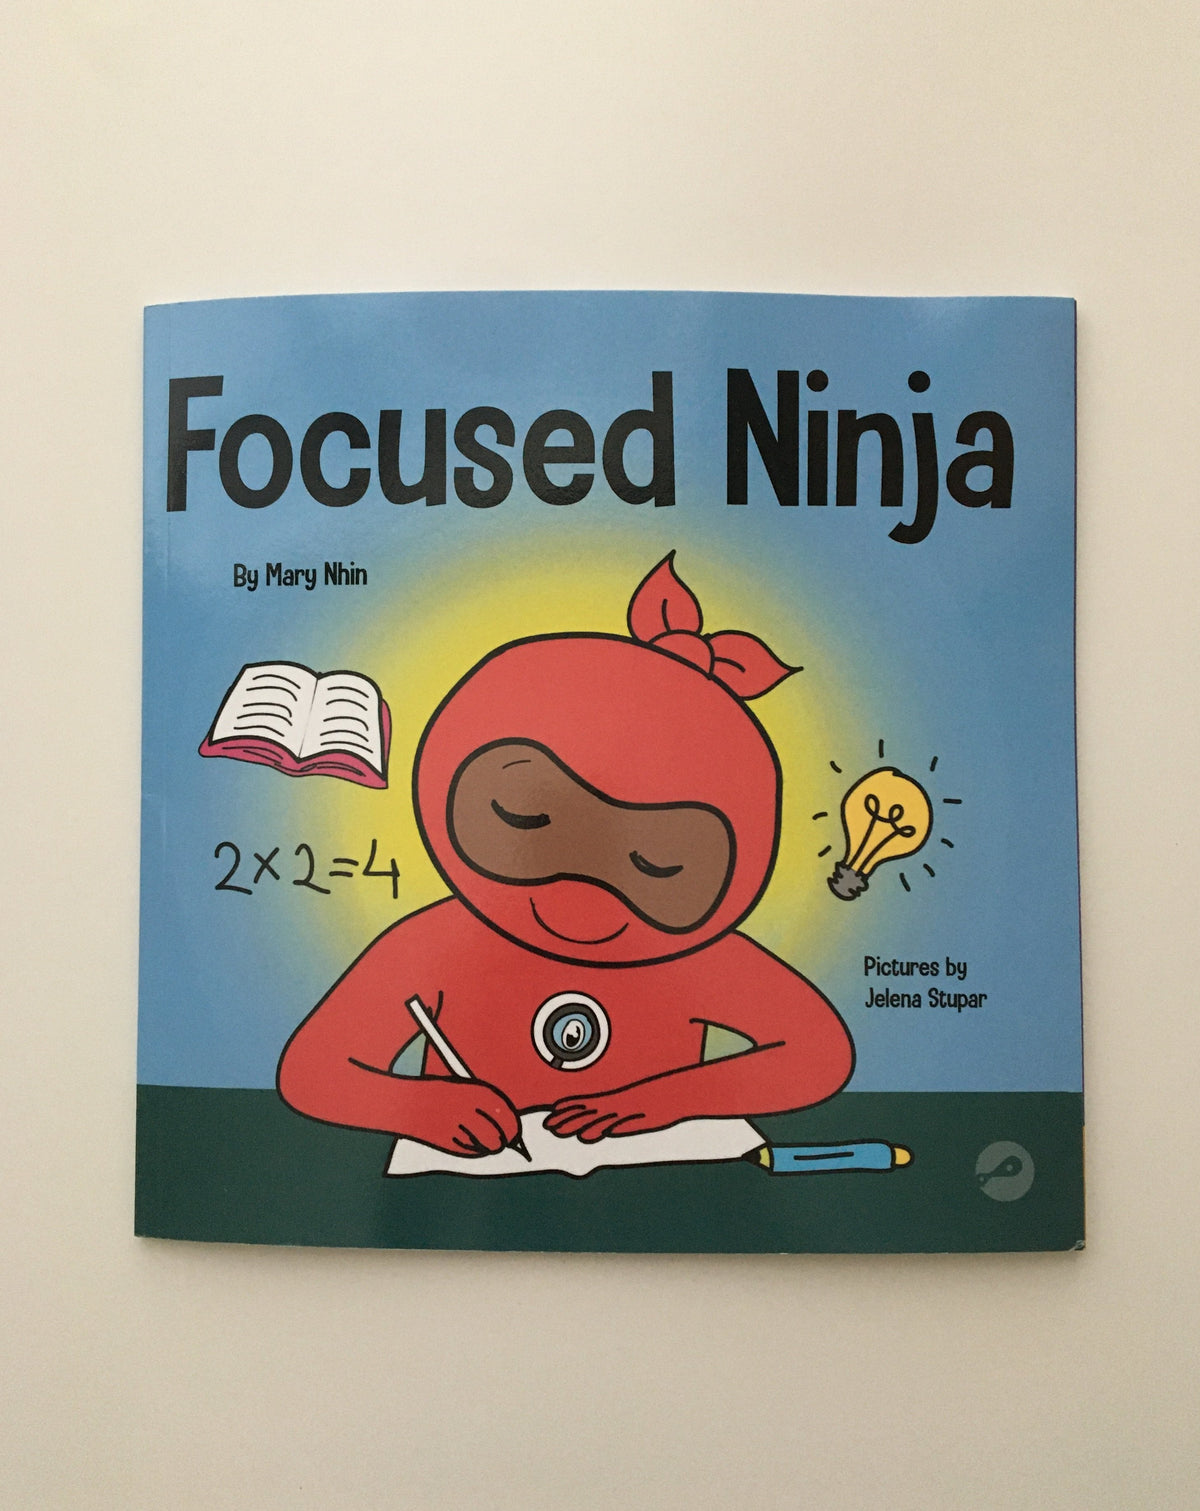 Focused Ninja by Mary Nhin